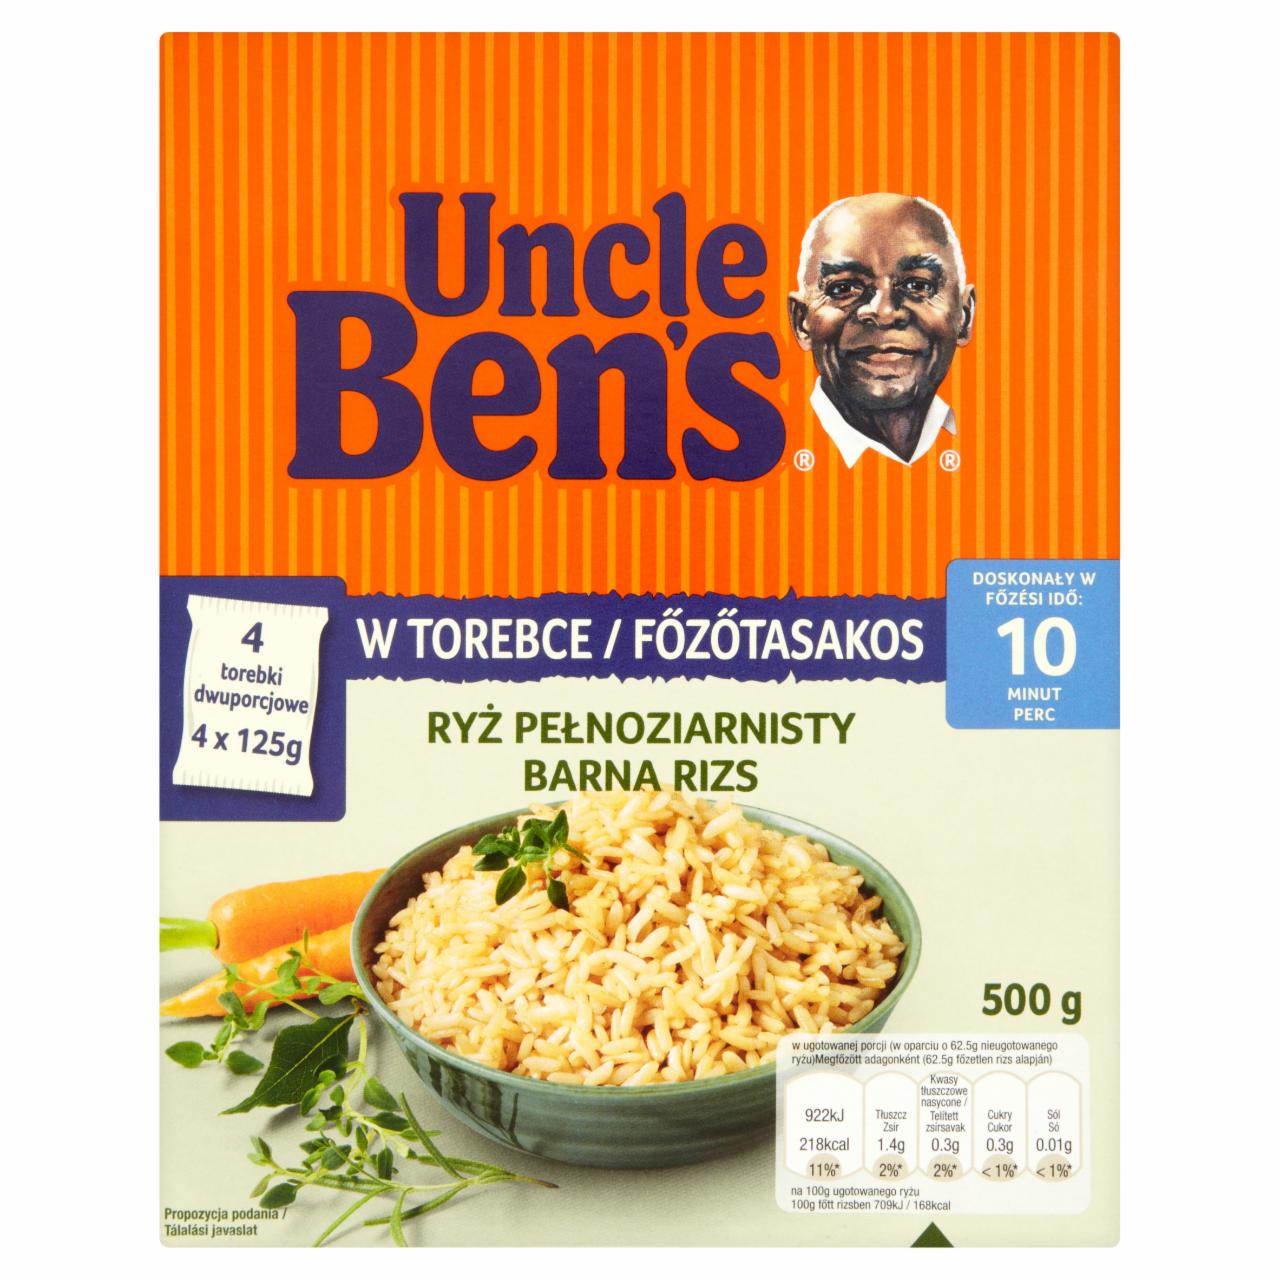 Képek - Főzőtasakos barna rizs Uncle Ben's